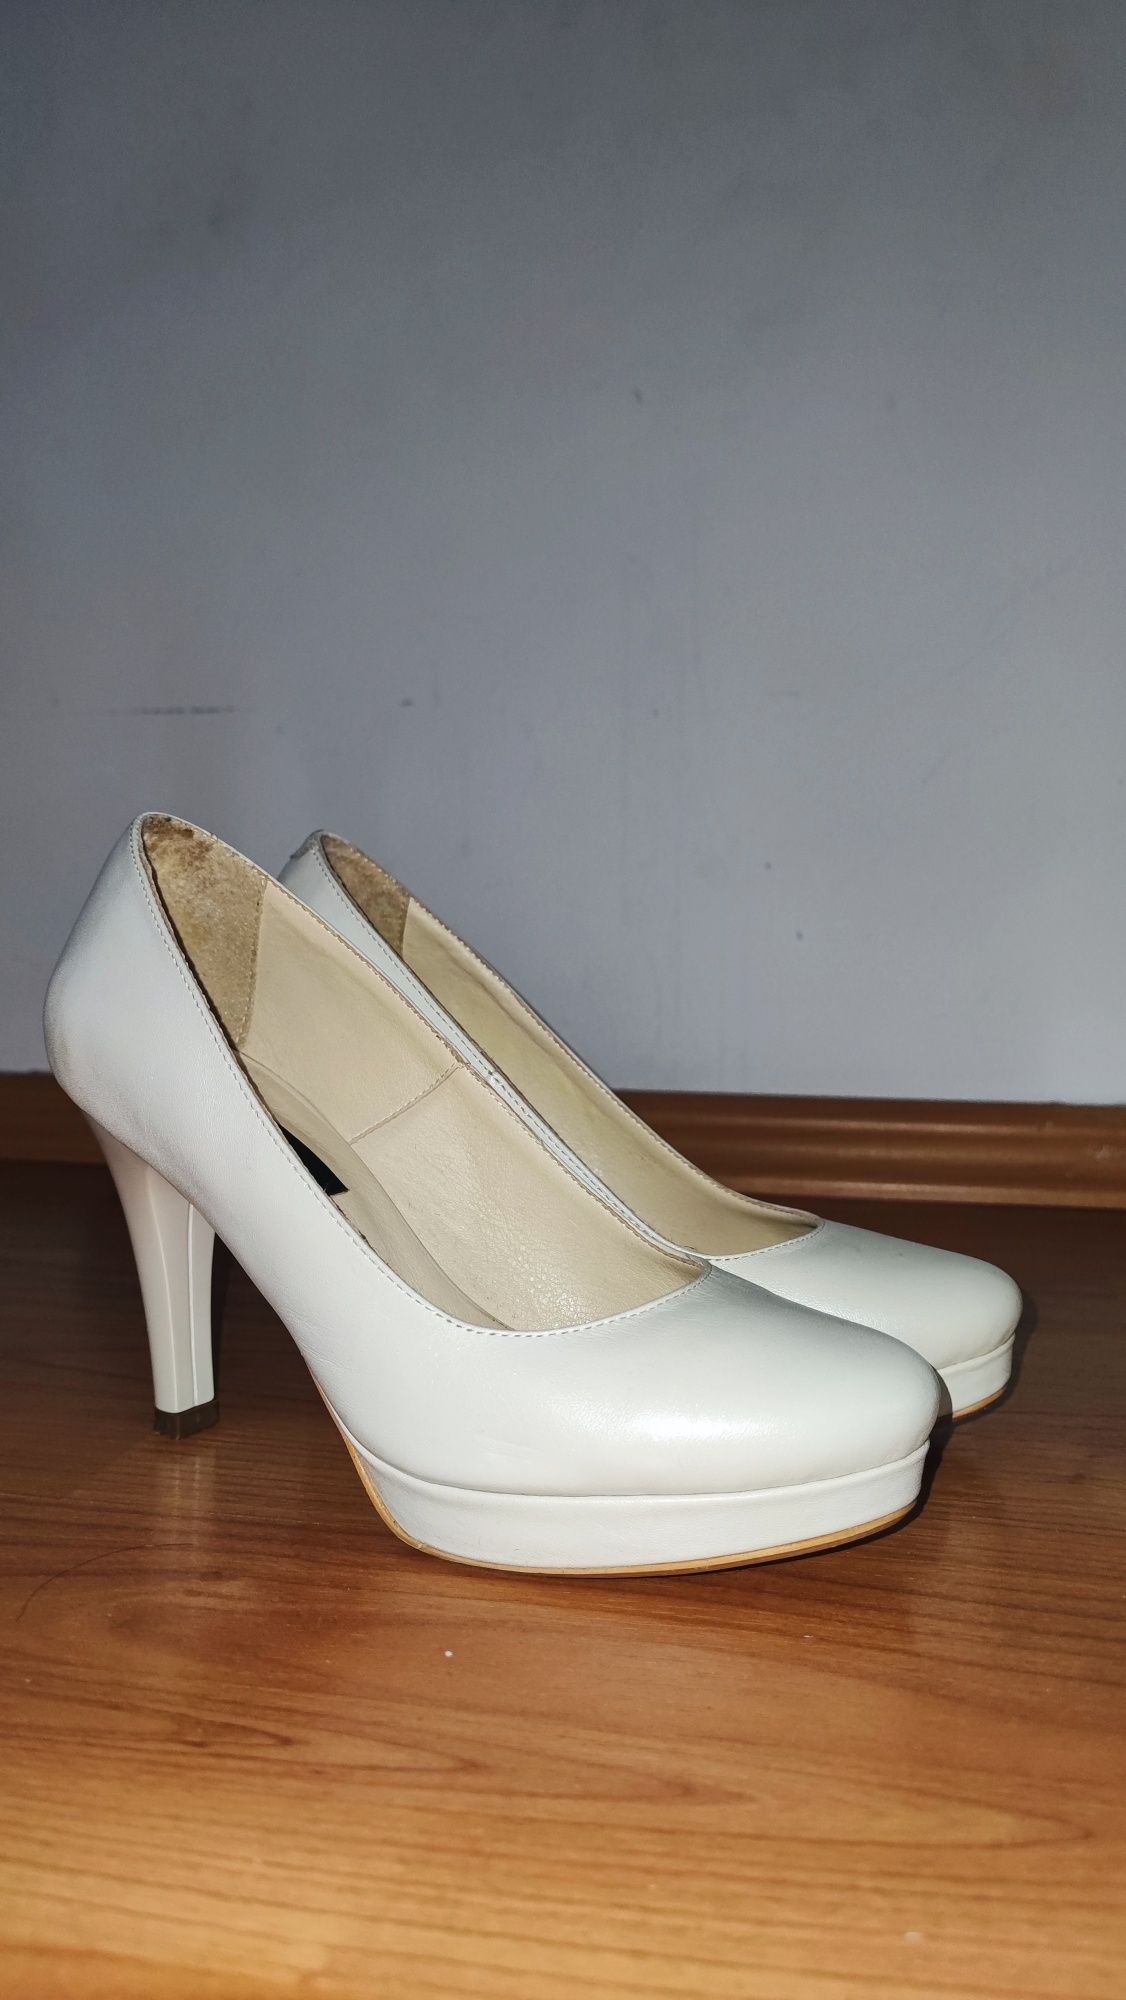 Pantofi cu toc (culoare alb-sidefat) măsura 36-37